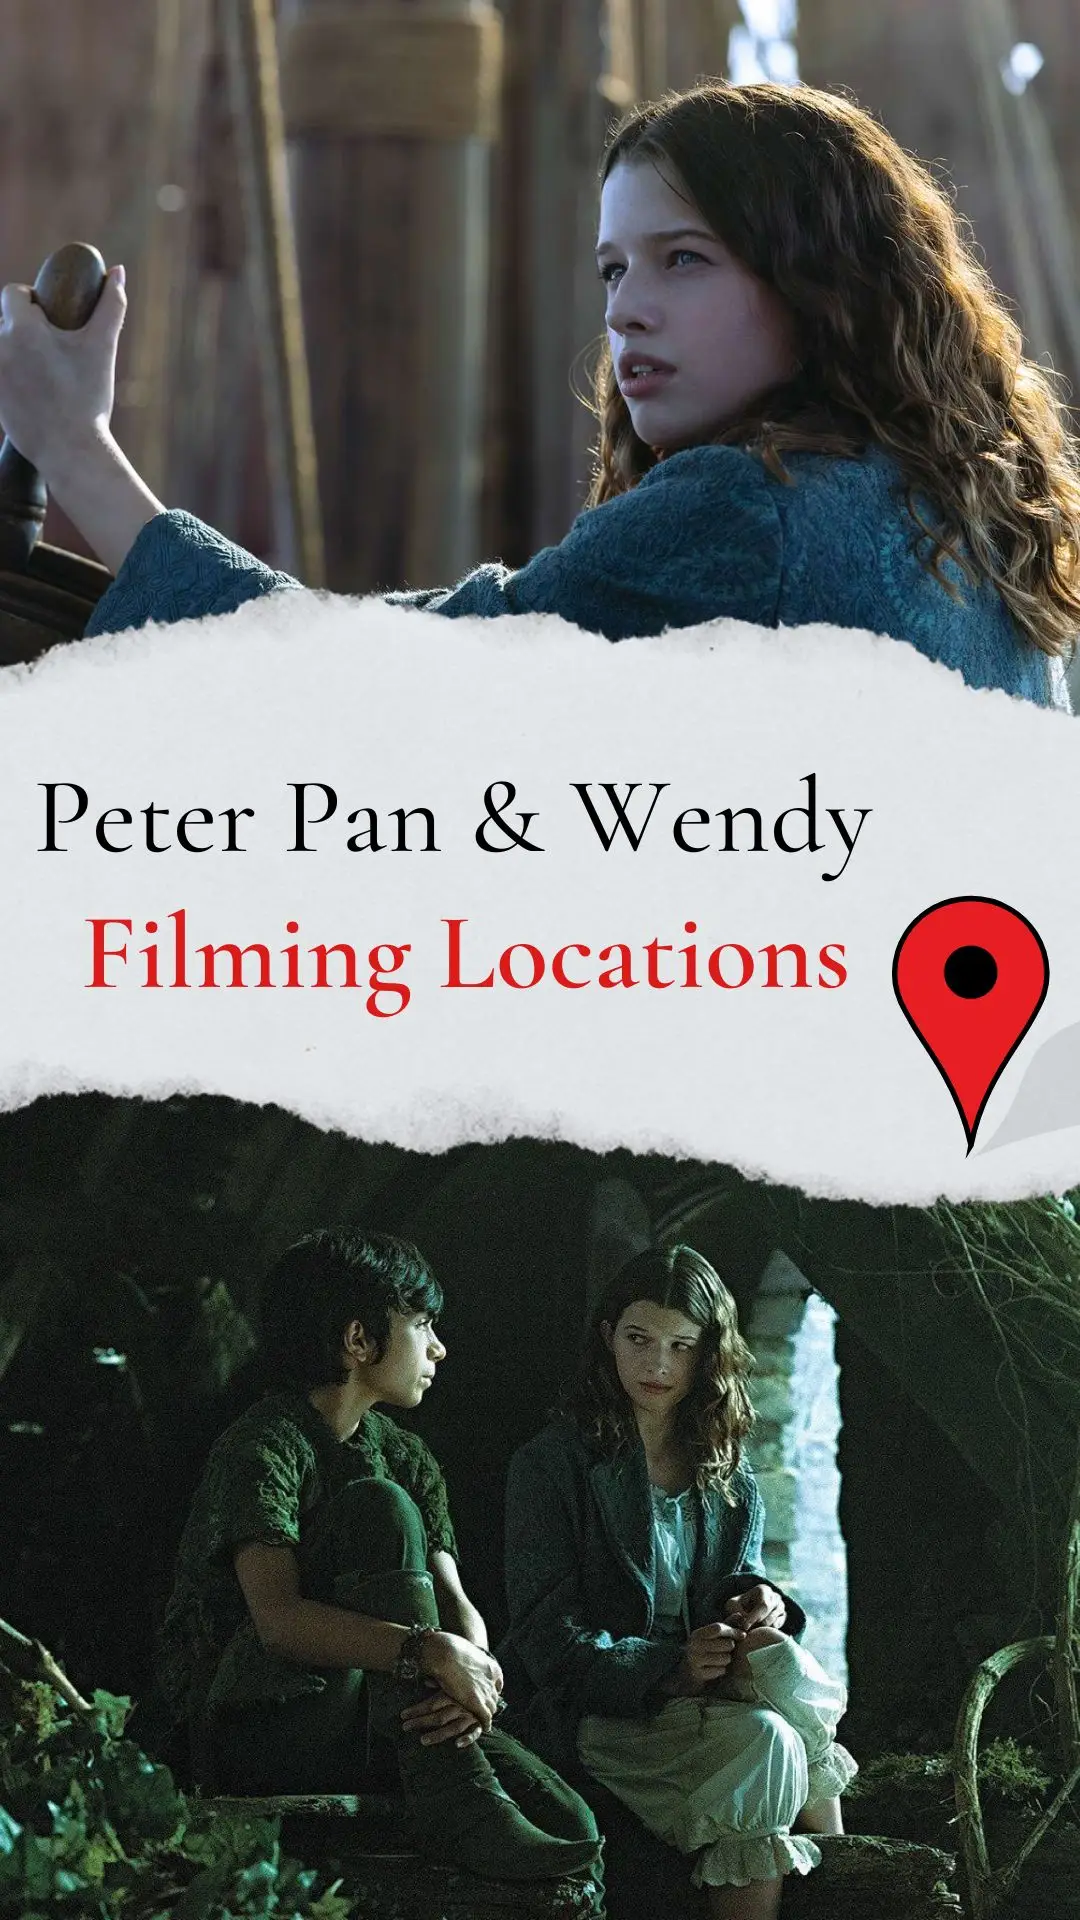 Peter Pan & Wendy Filming Locations